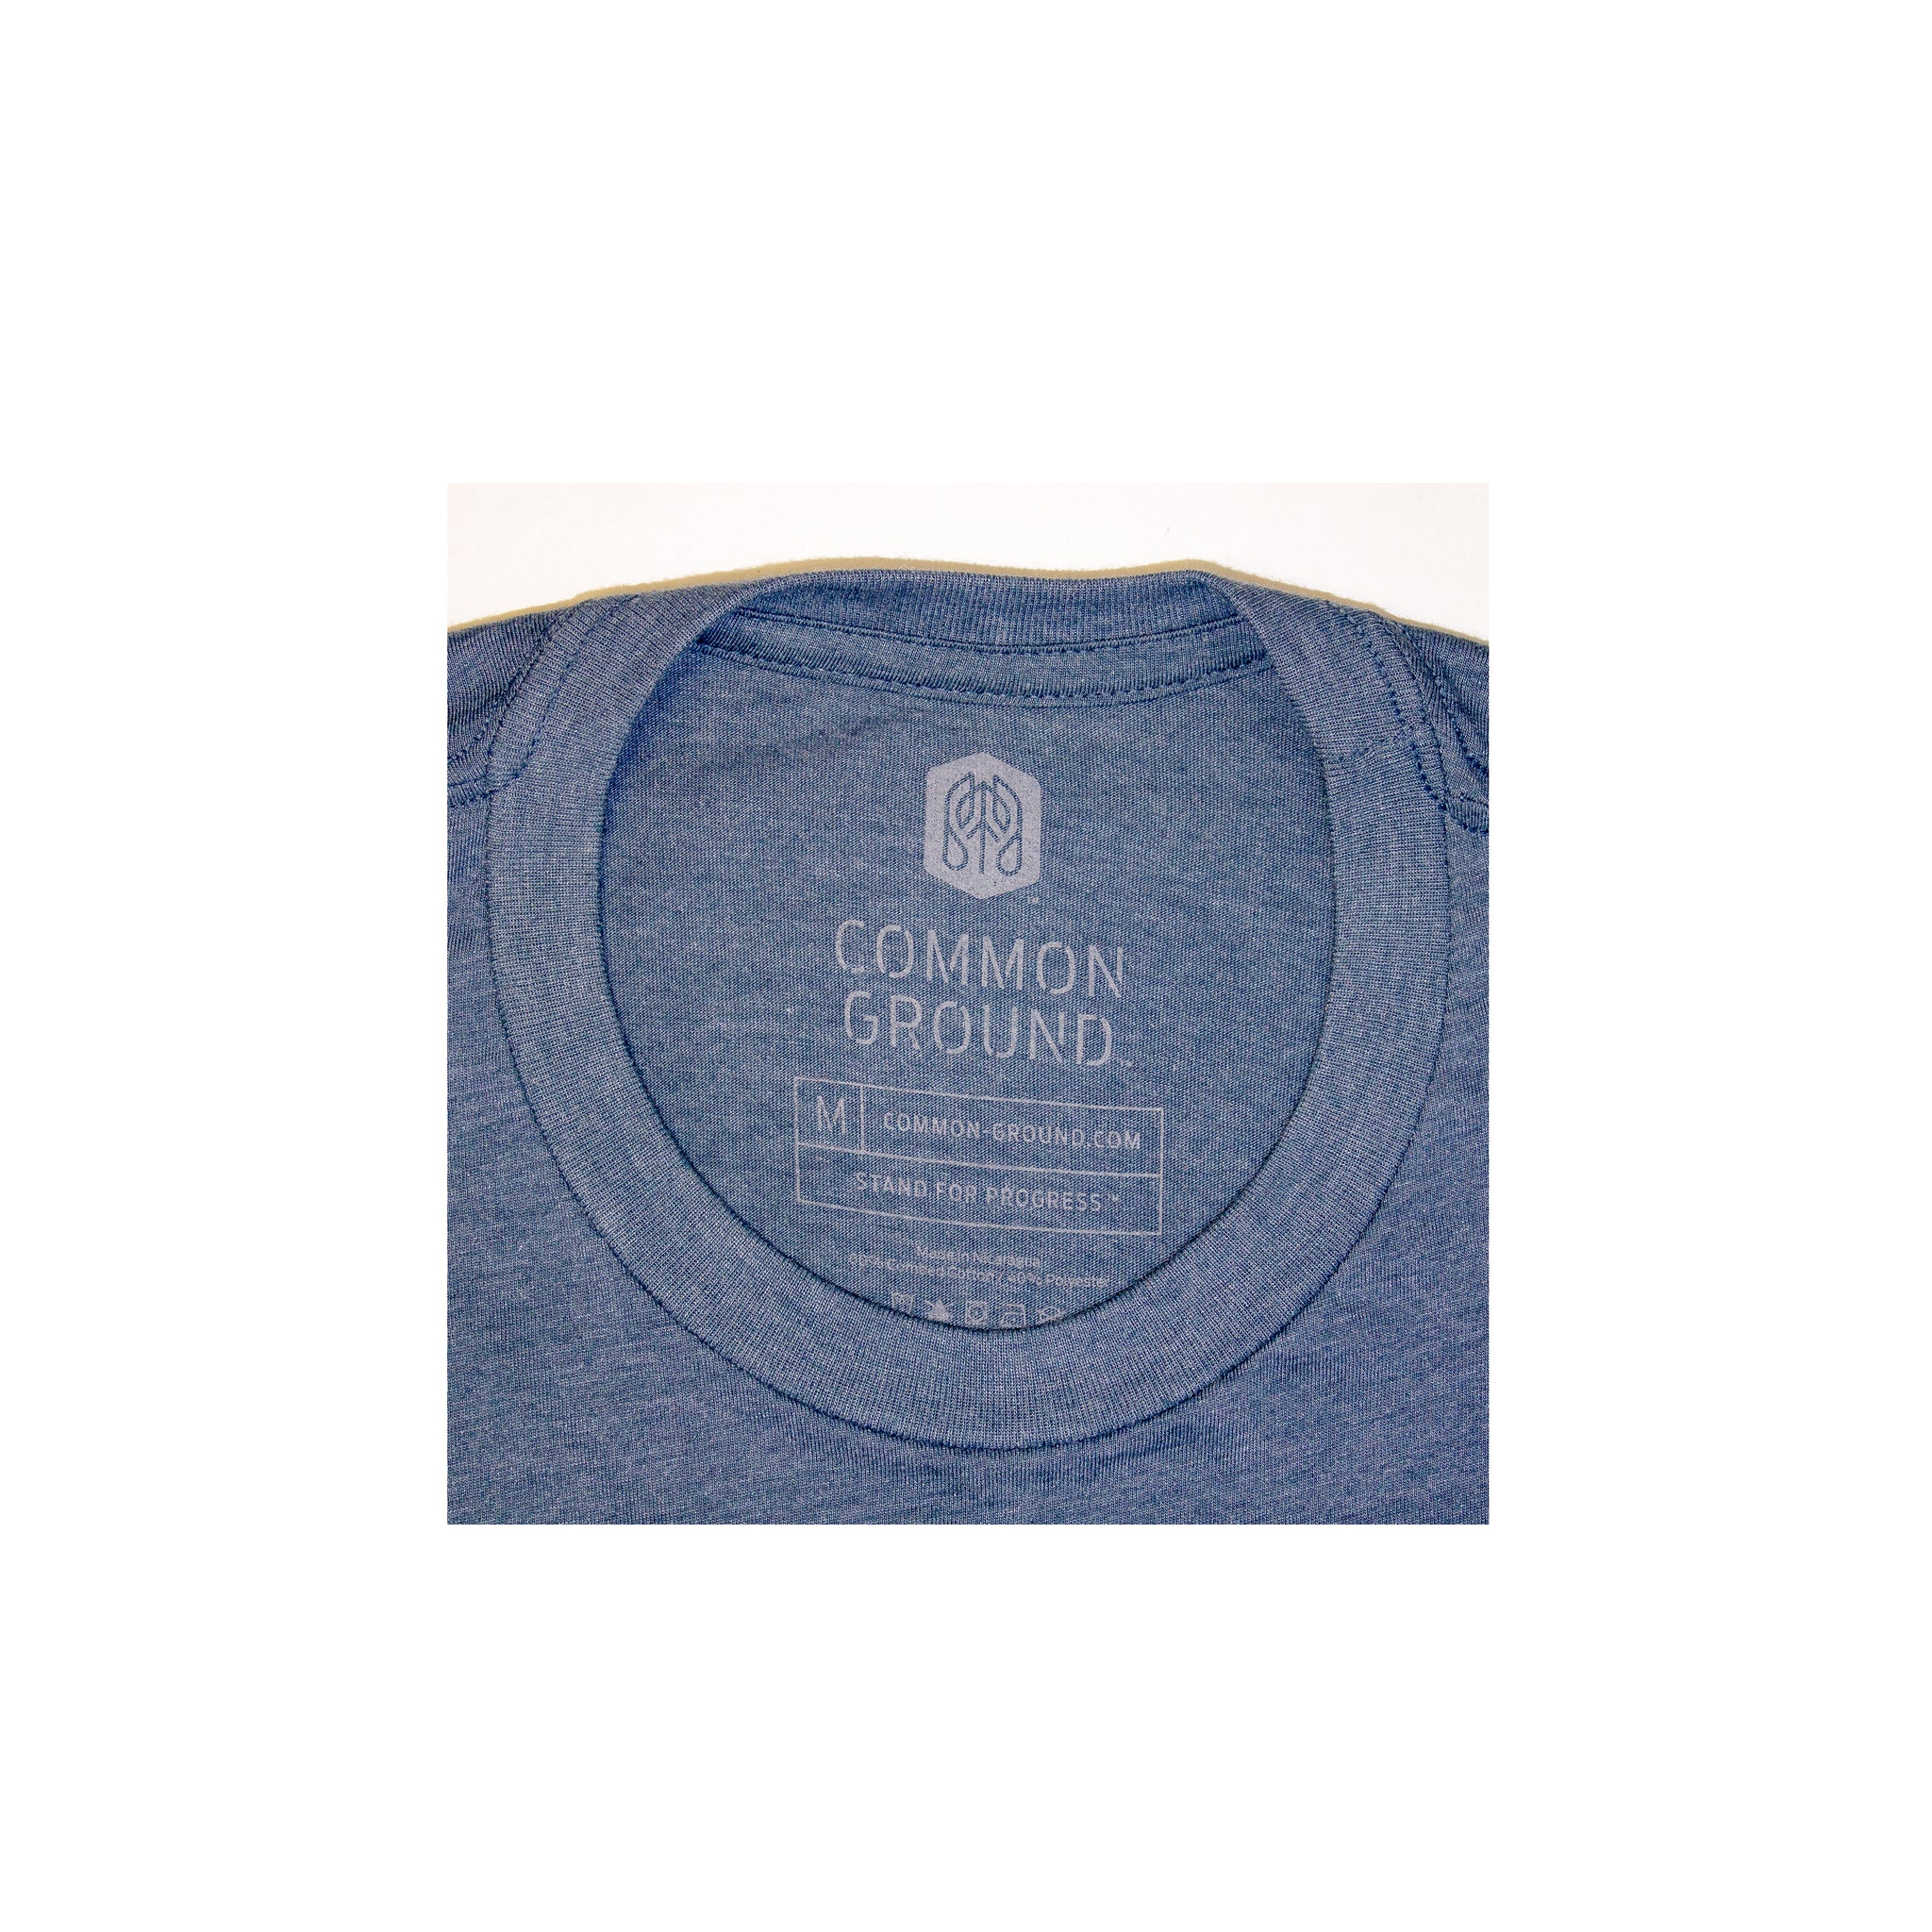 Indigo -  Common Ground Badge T shirt Neck Tag View